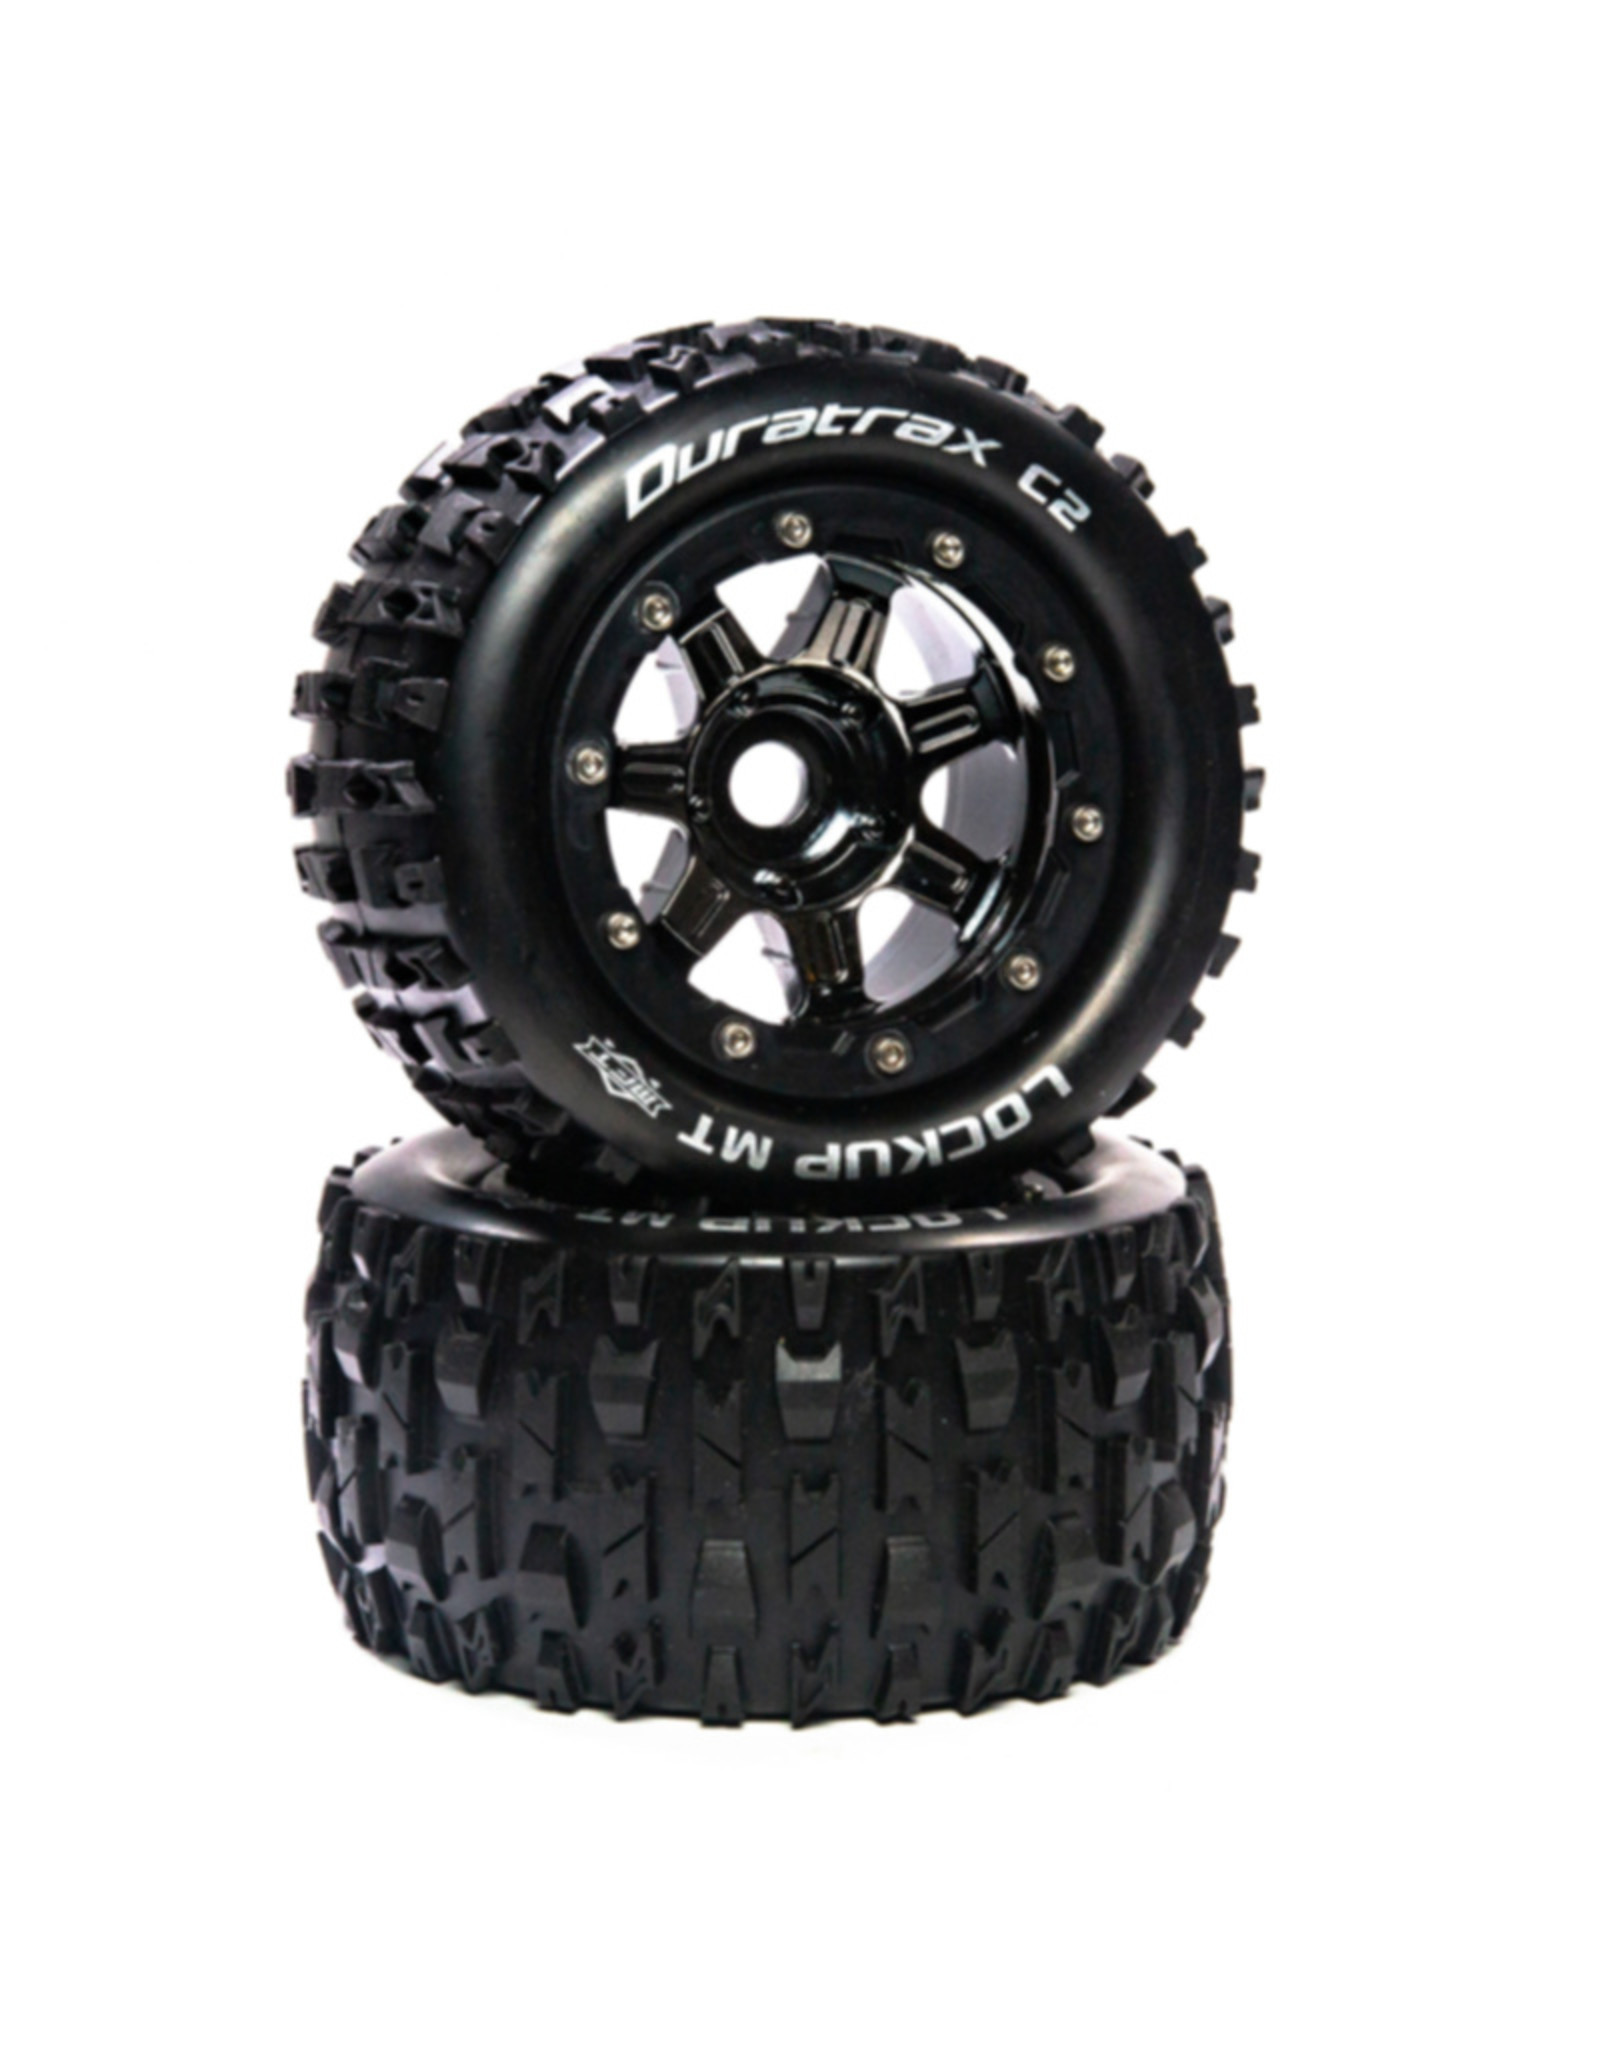 Duratrax DTXC5603  Lockup MT Belt 2.8" Mounted Front/Rear Tires, .5 Offset 17mm, Black Chrome (2)